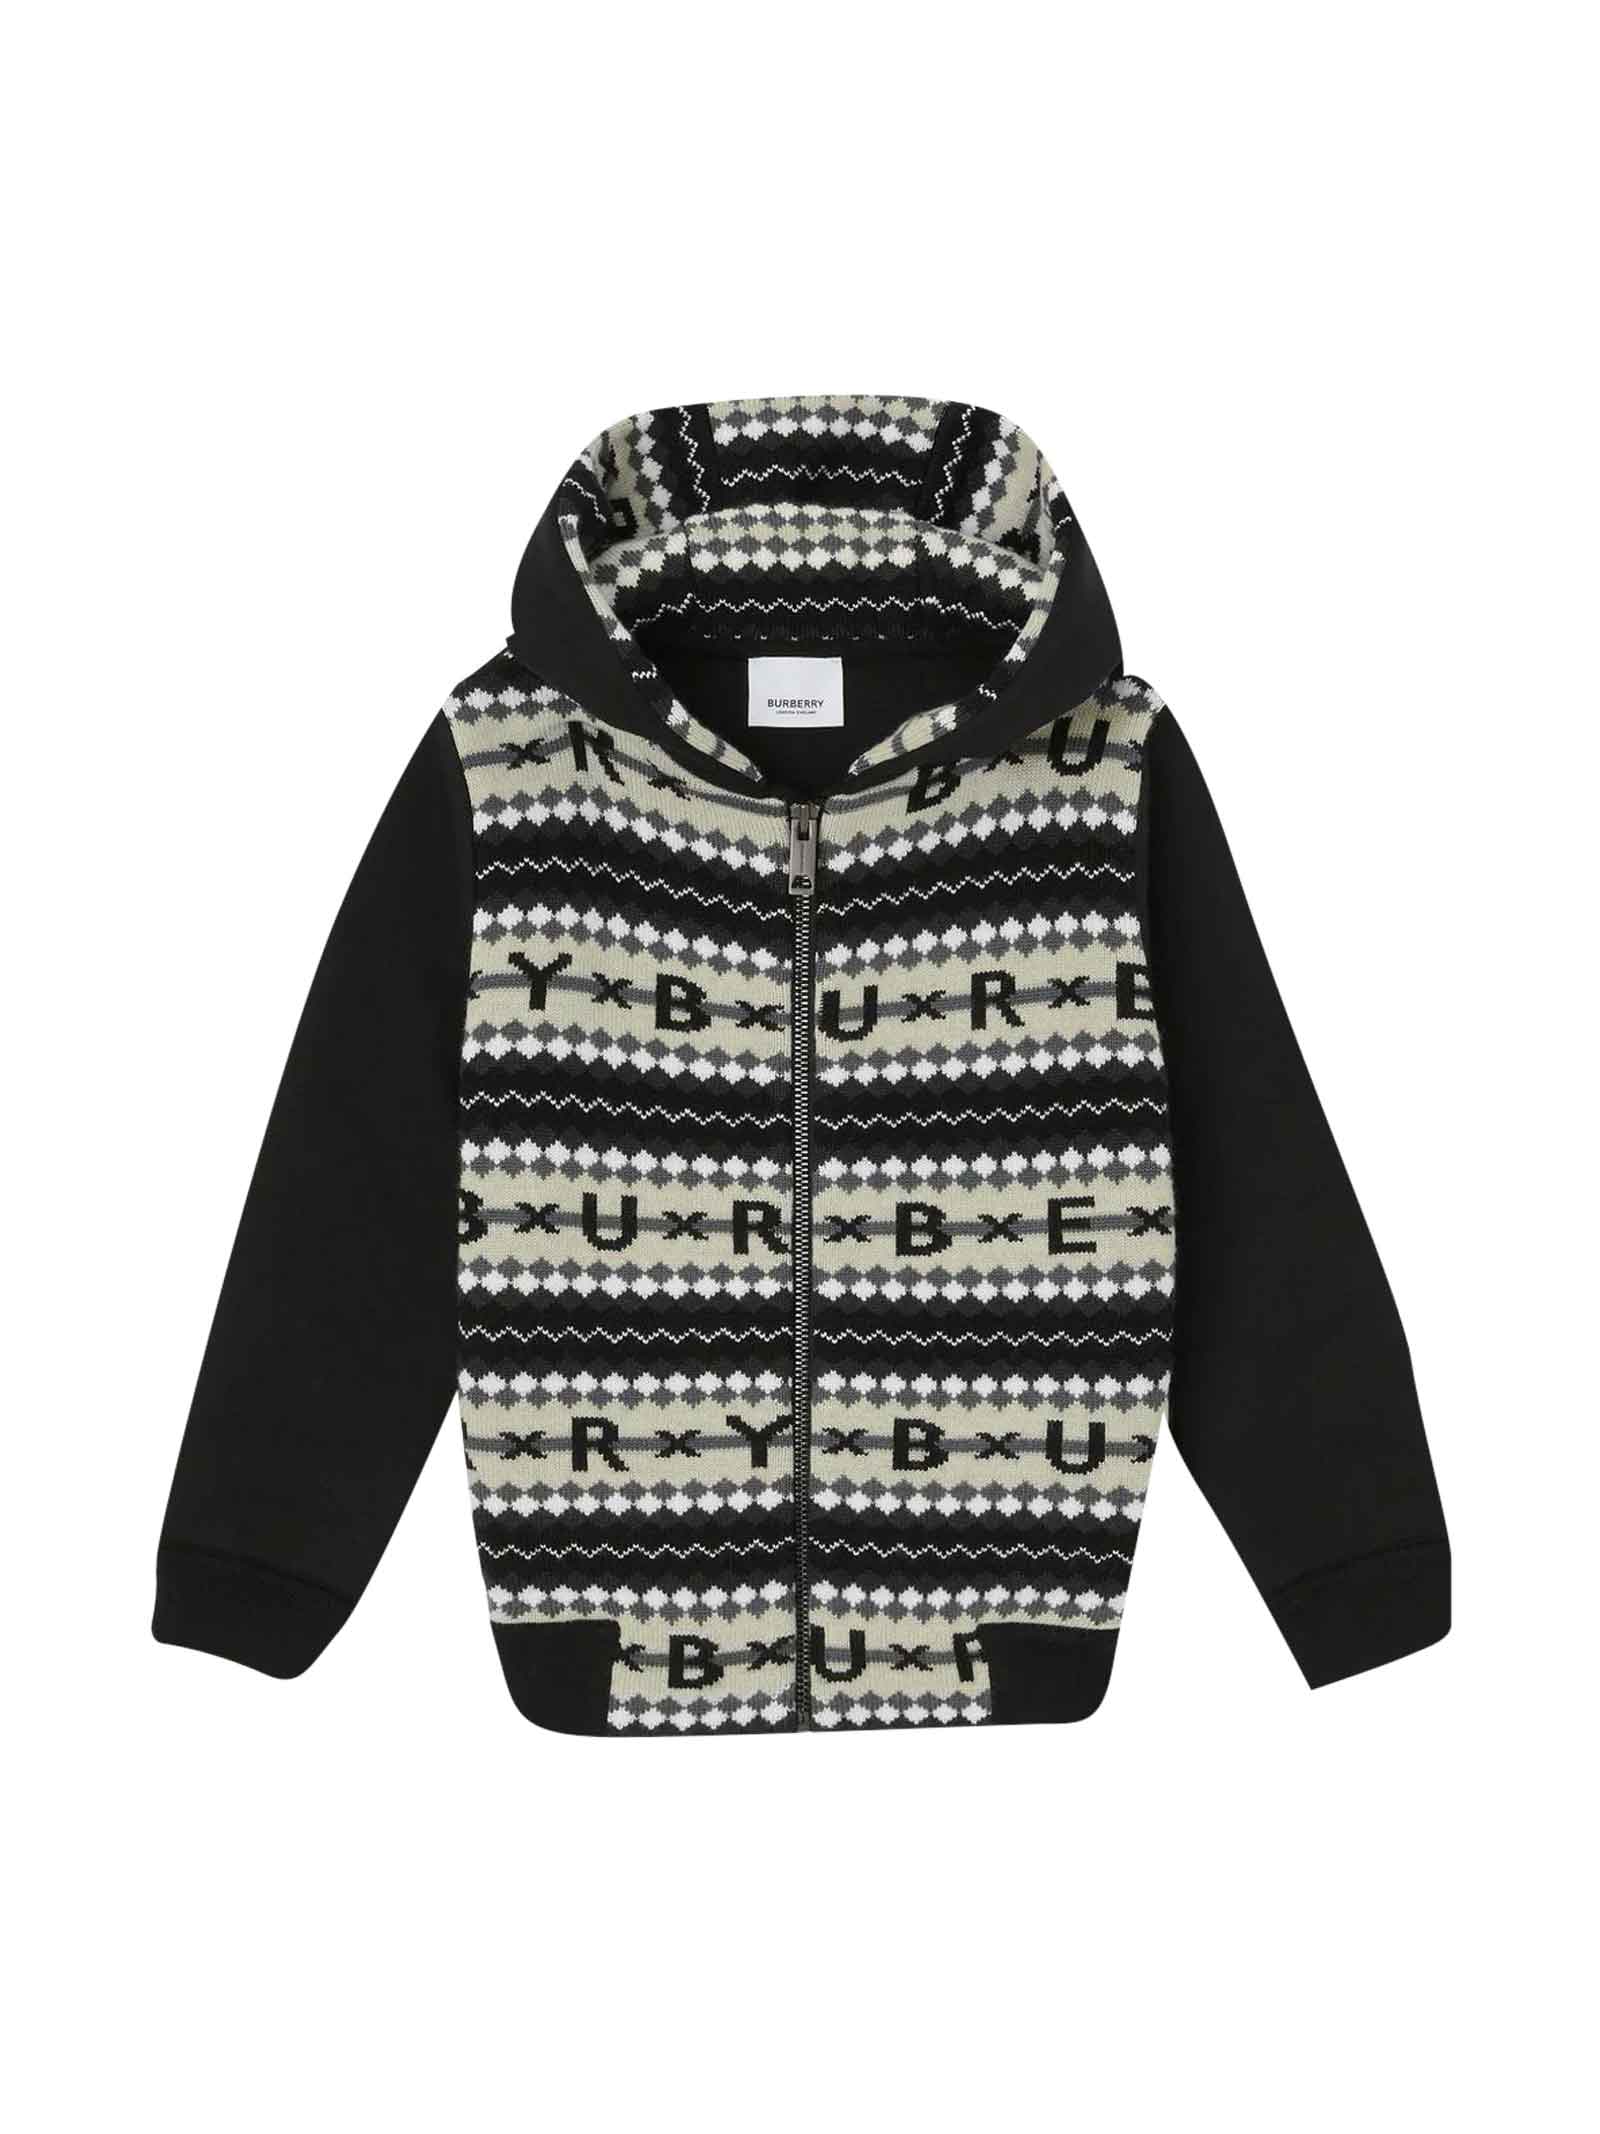 Burberry Black Sweatshirt Unisex